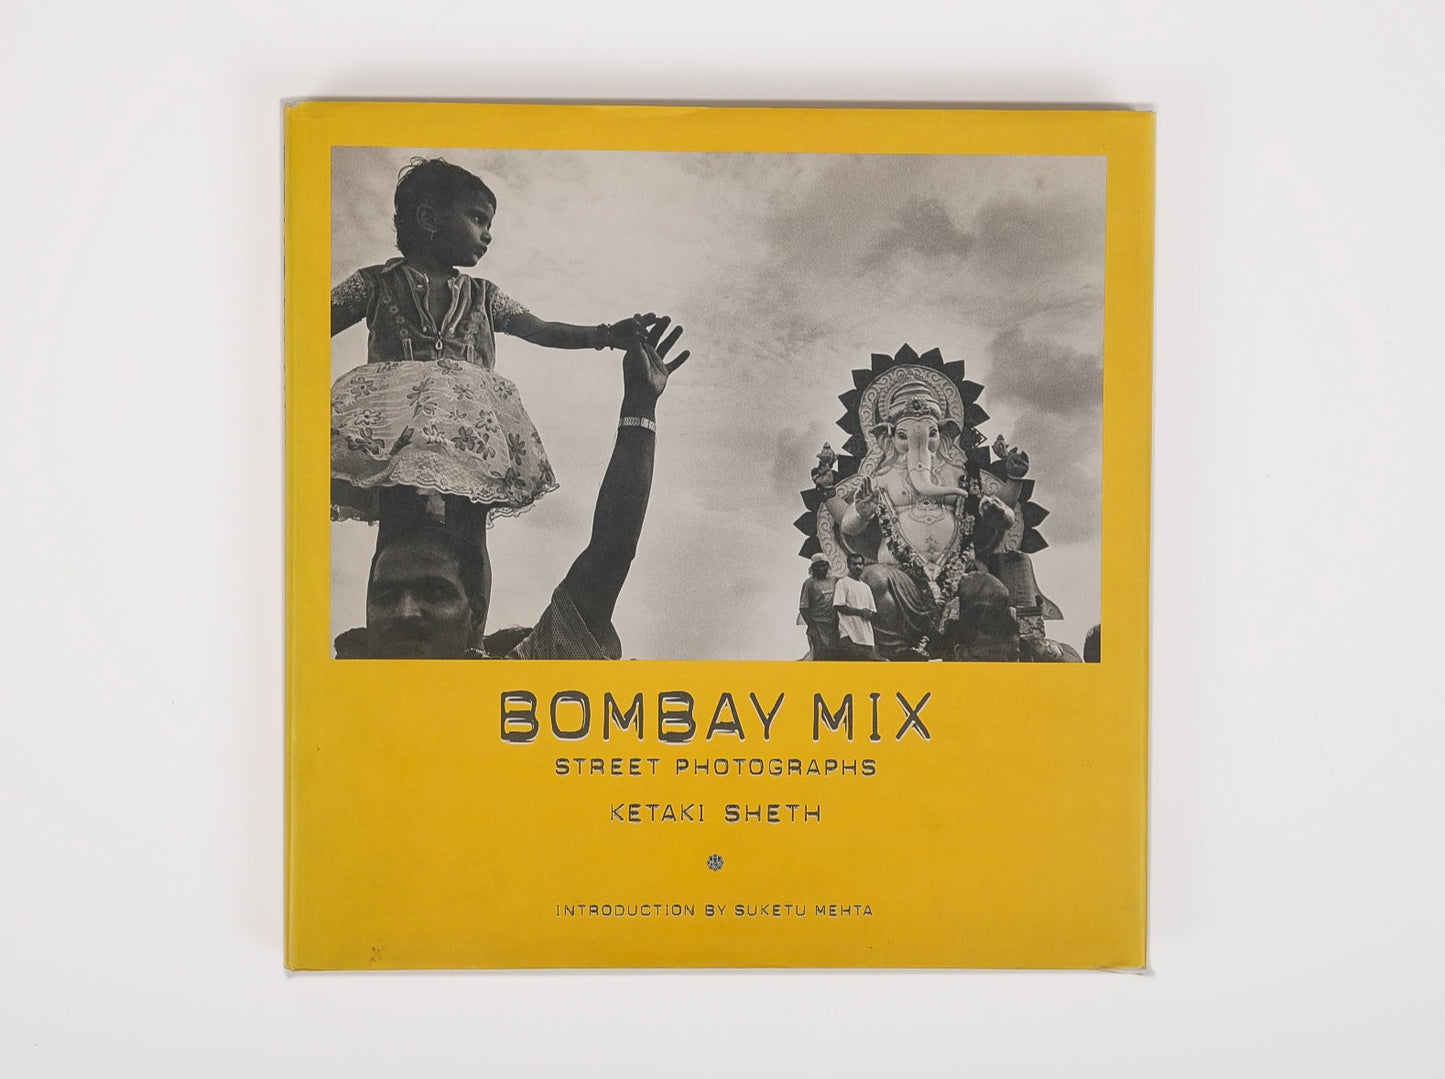 BOMBAY MIX: STREET PHOTOGRAPHS - Ketaki Sheth